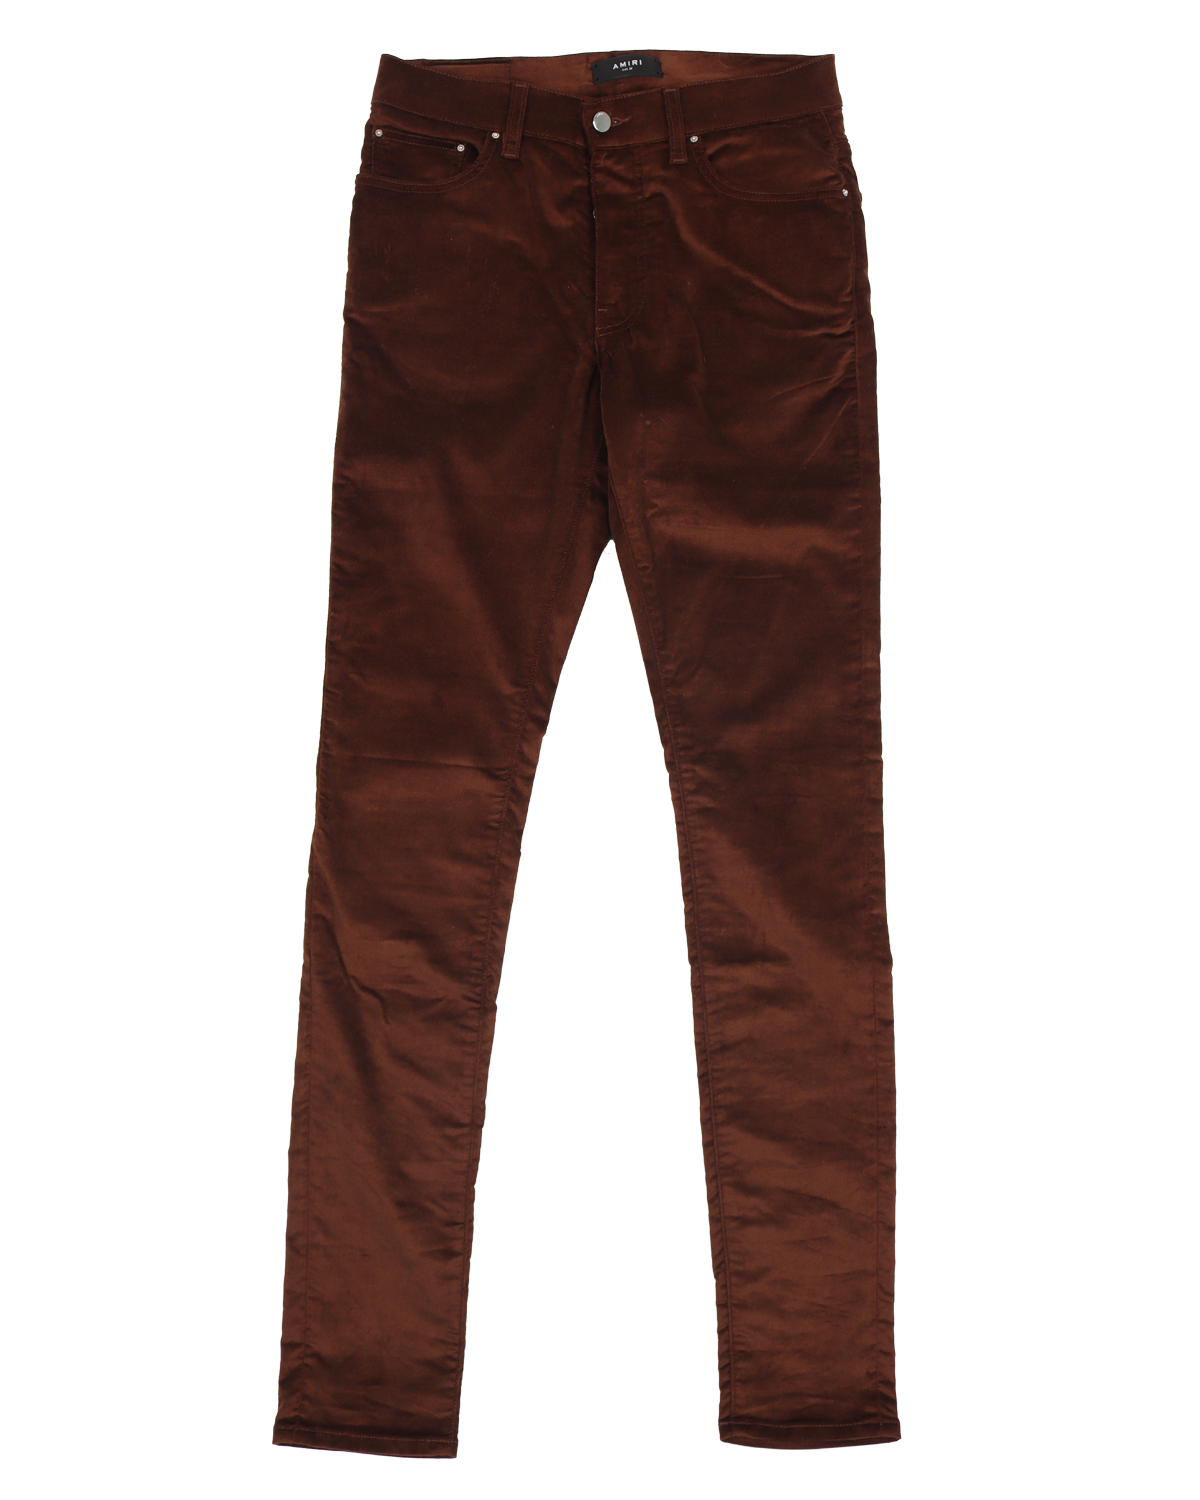 Brown Velour Pants